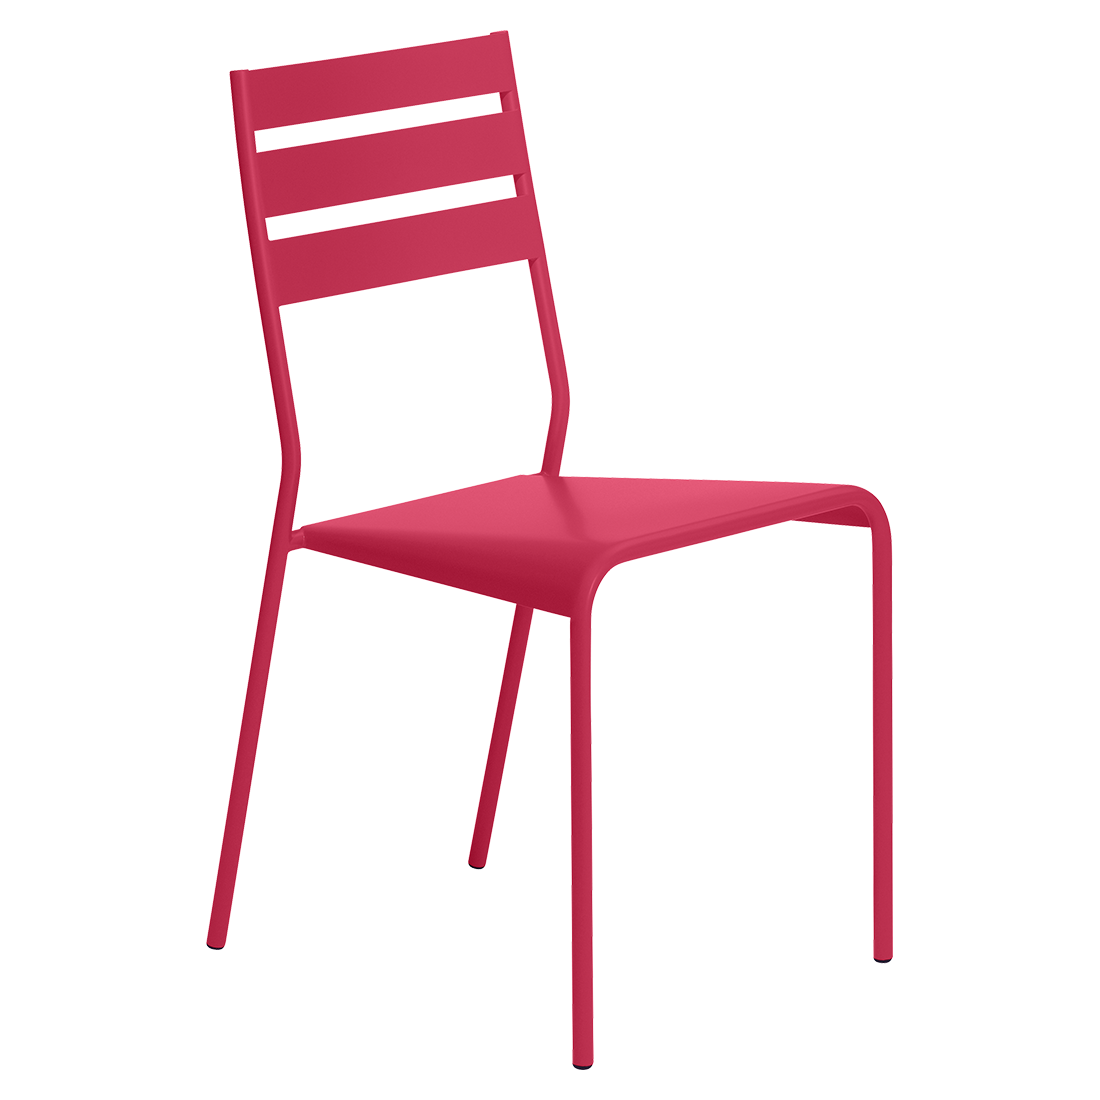 chaise metal, chaise design, chaise patrick jouin, chaise de jardin chaise rose